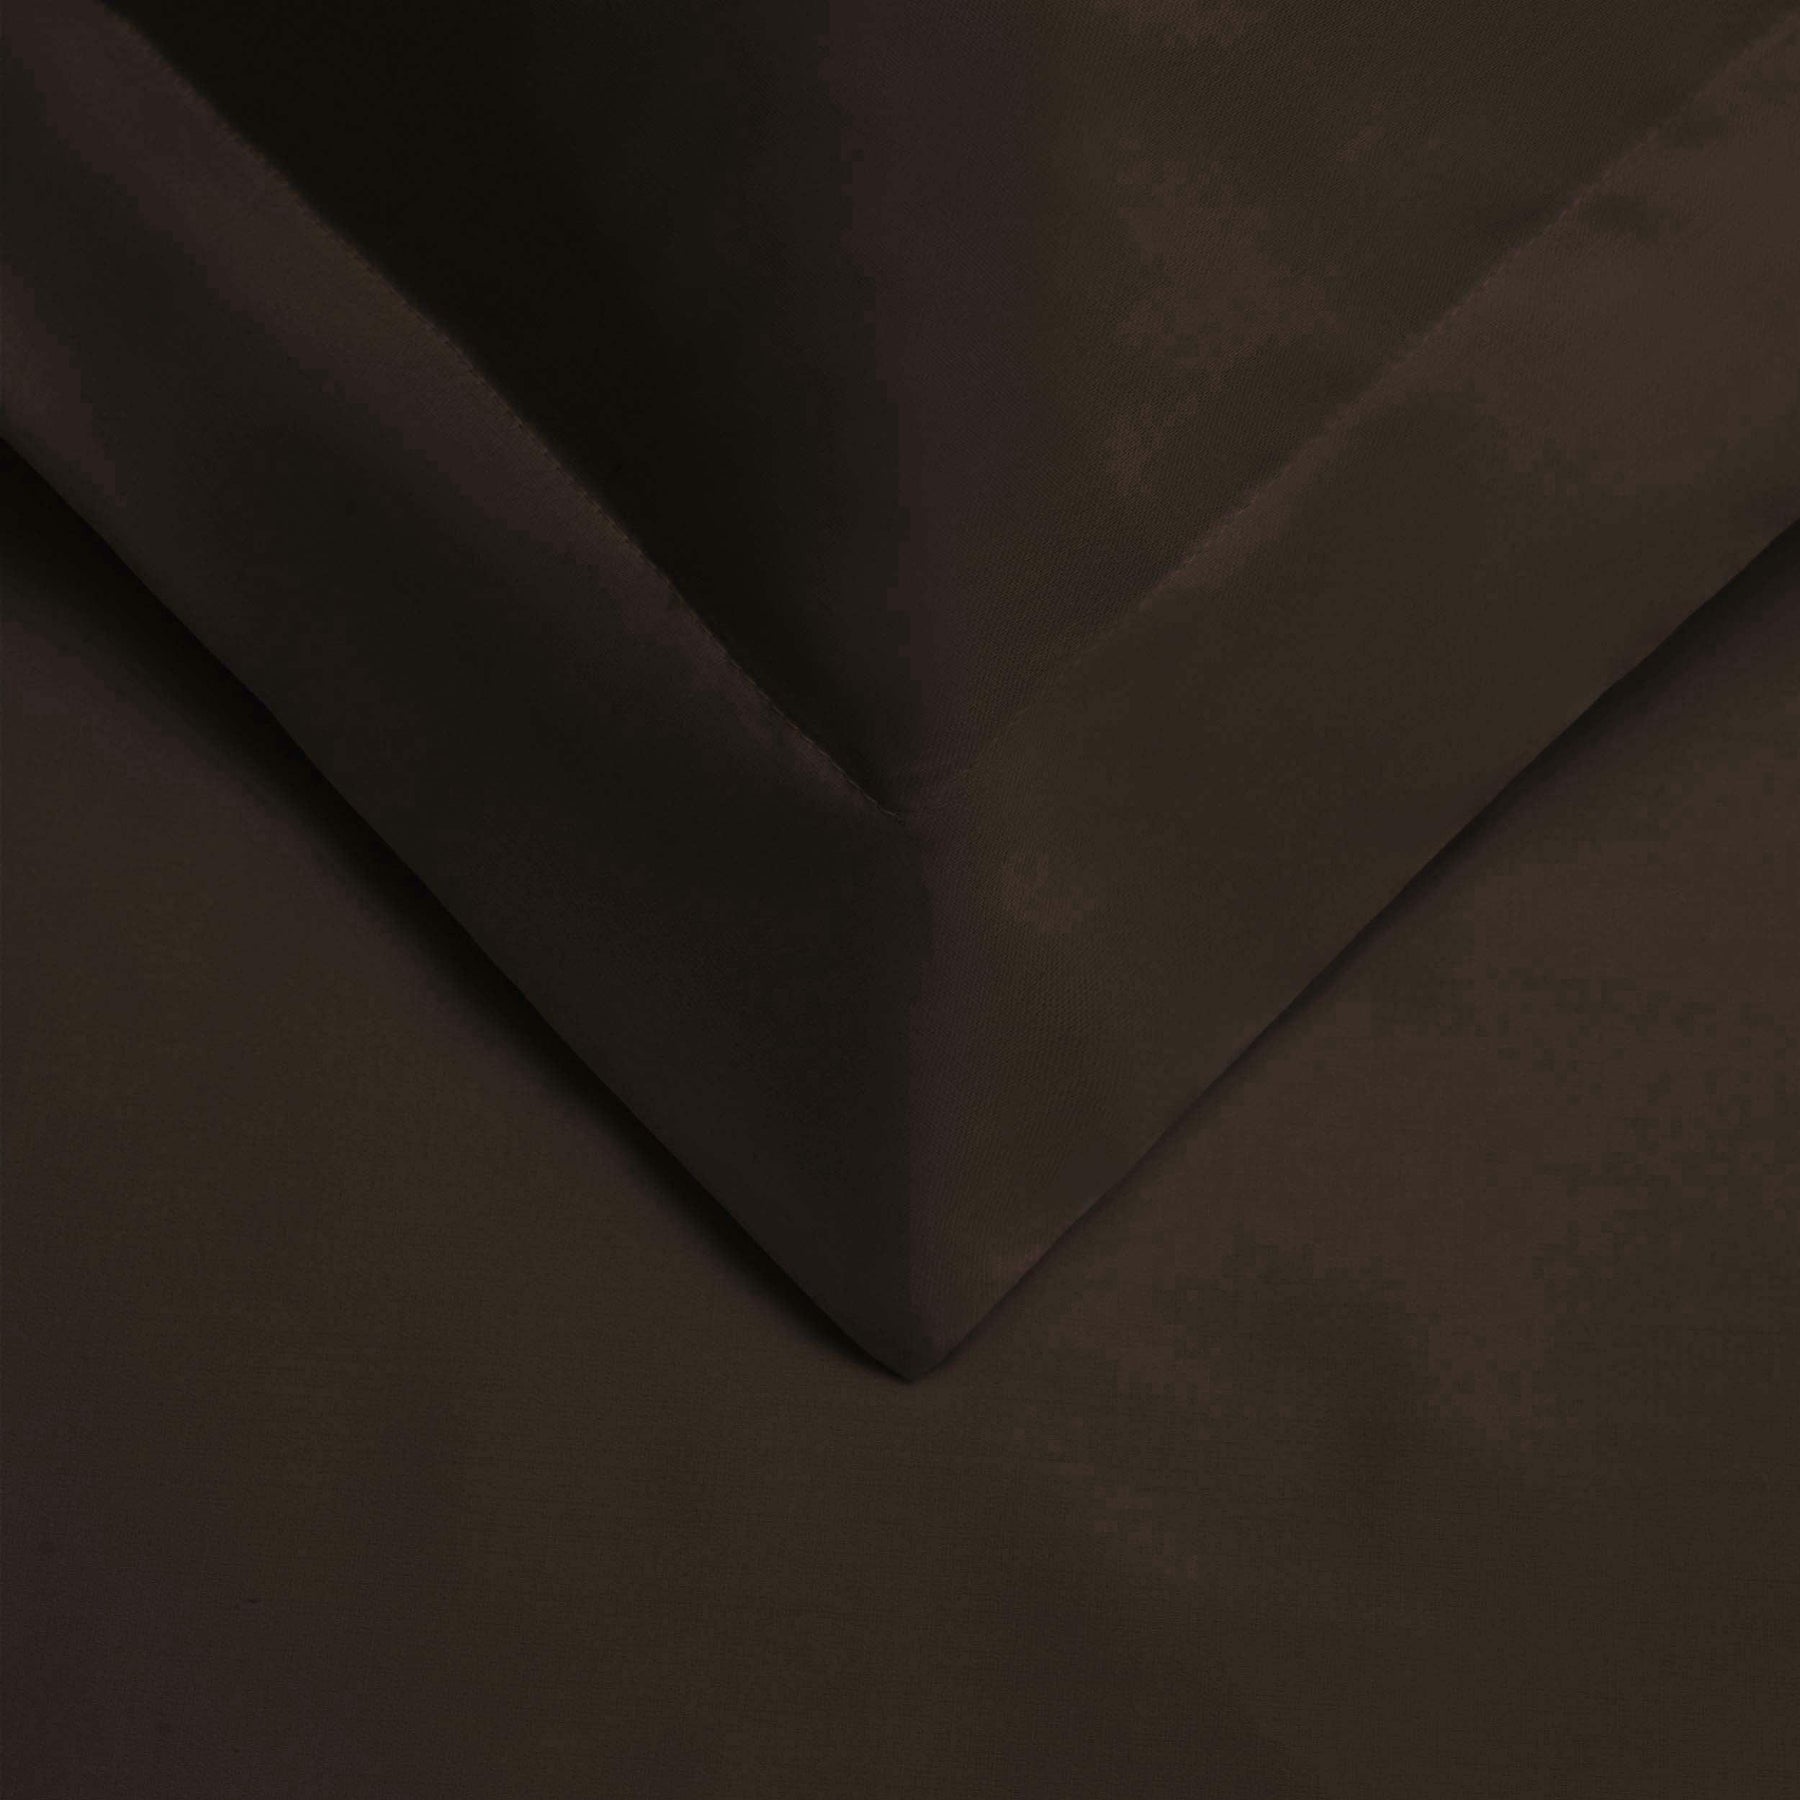  Superior Premium Egyptian Cotton 530 Thread Count Solid Duvet Cover Set - Chocolate